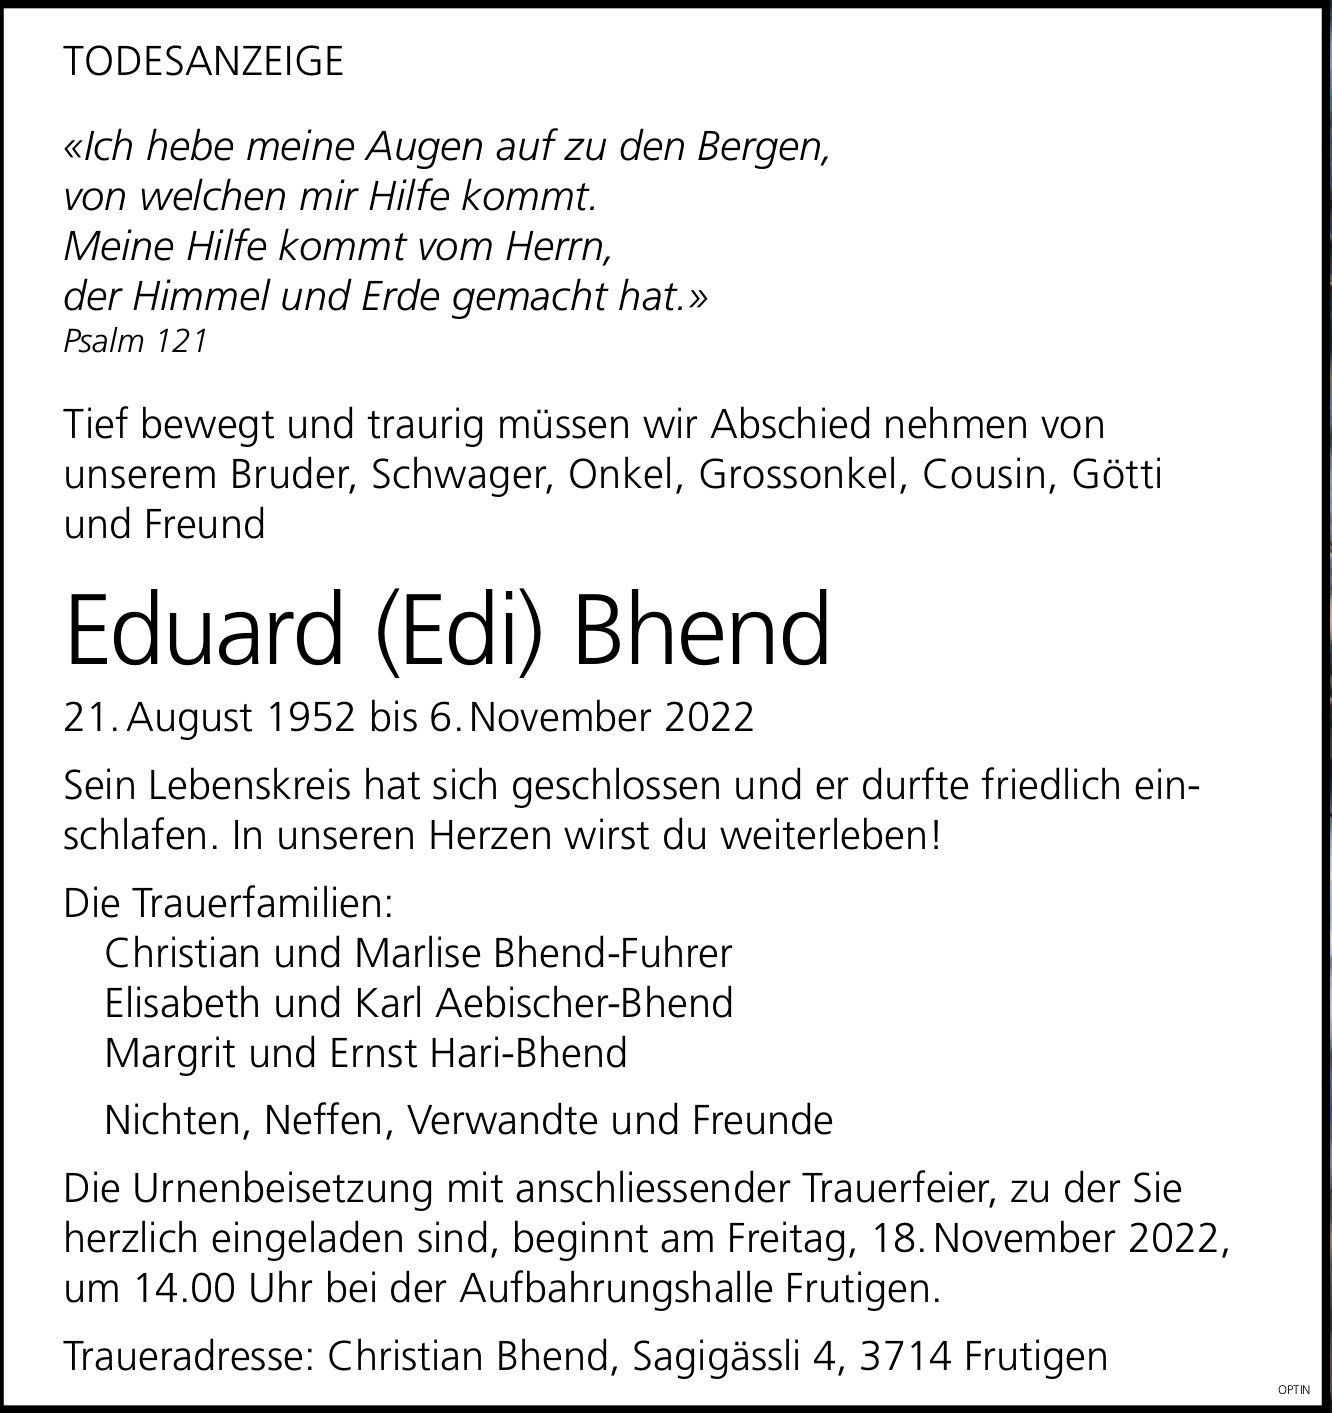 Eduard (Edi) Bhend, November 2022 / TA